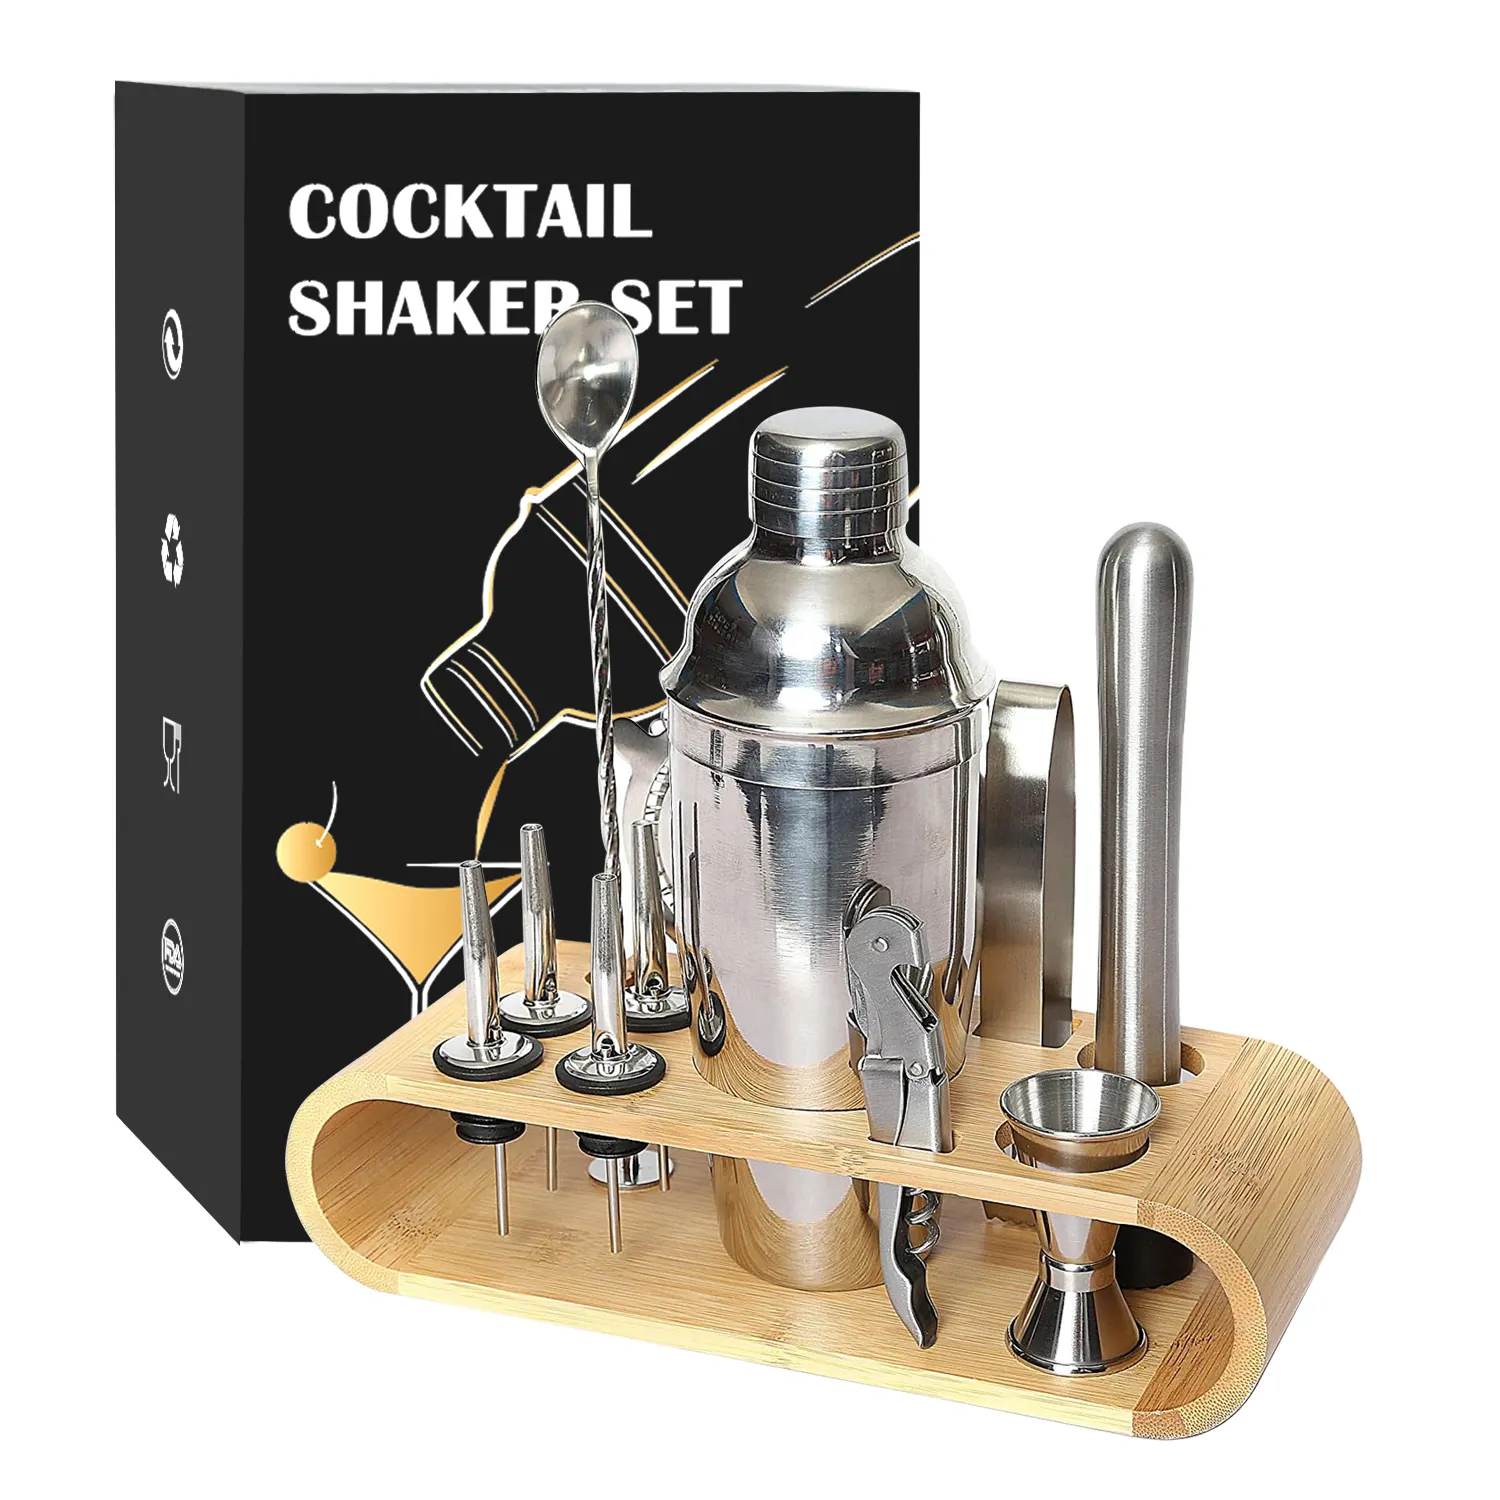 Qzq Martini Unieke Aangepaste Maken Bar Mini Barman Kit Rvs Set Cocktail Shaker Met Bamboe Stand